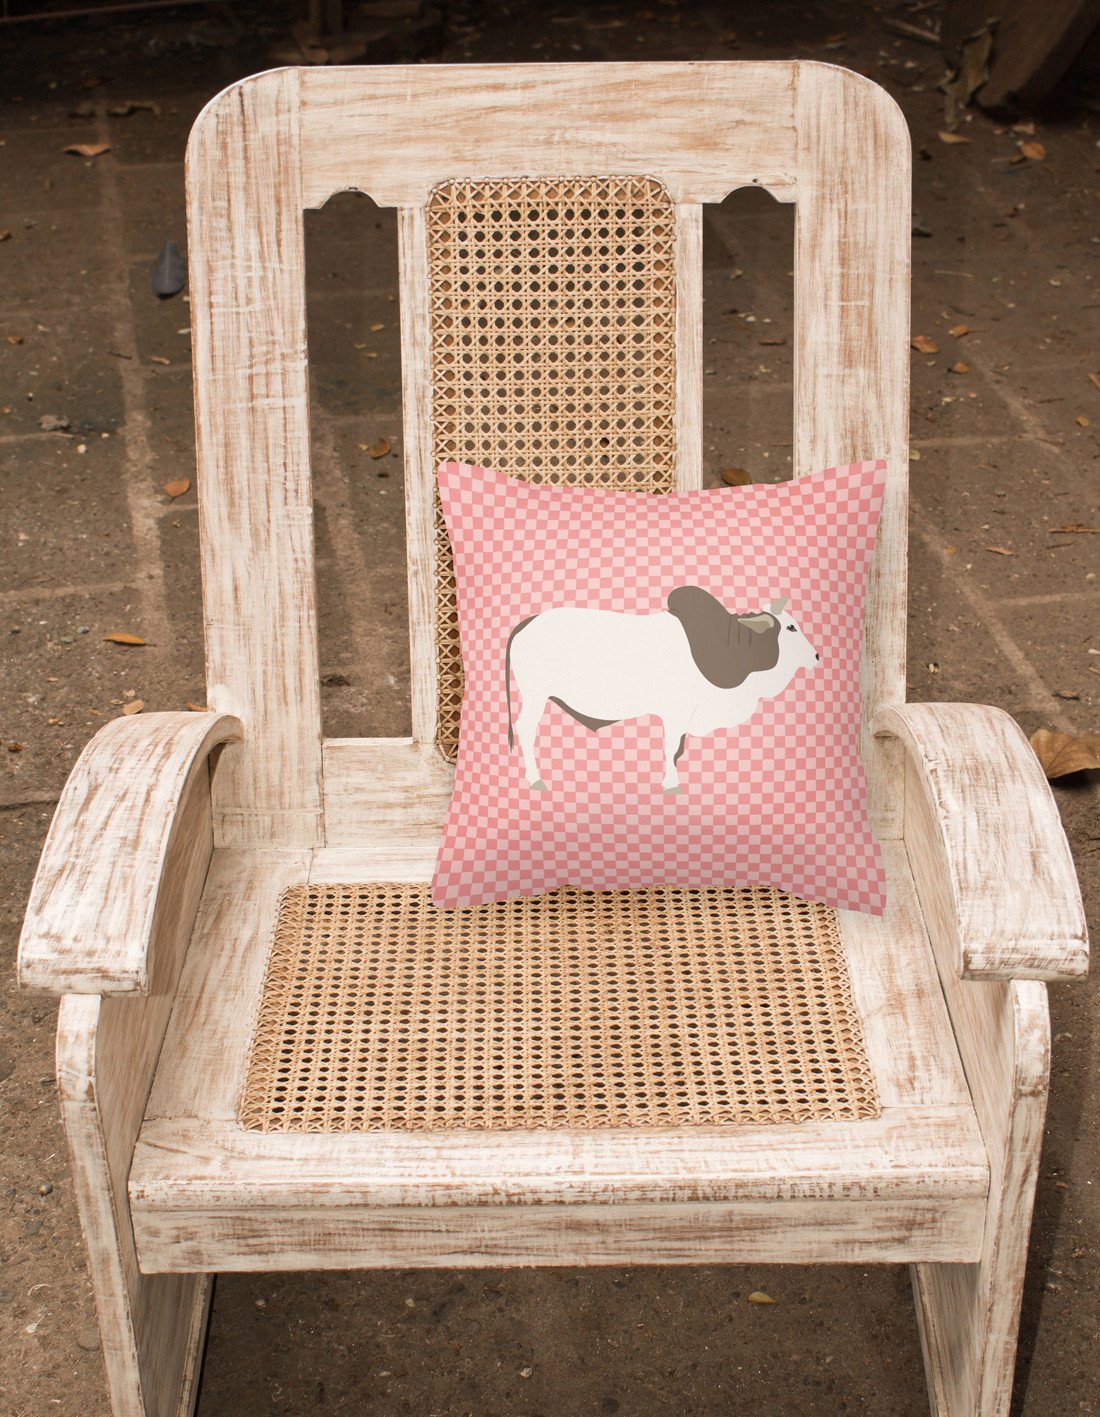 Malvi Cow Pink Check Fabric Decorative Pillow BB7830PW1818 by Caroline's Treasures